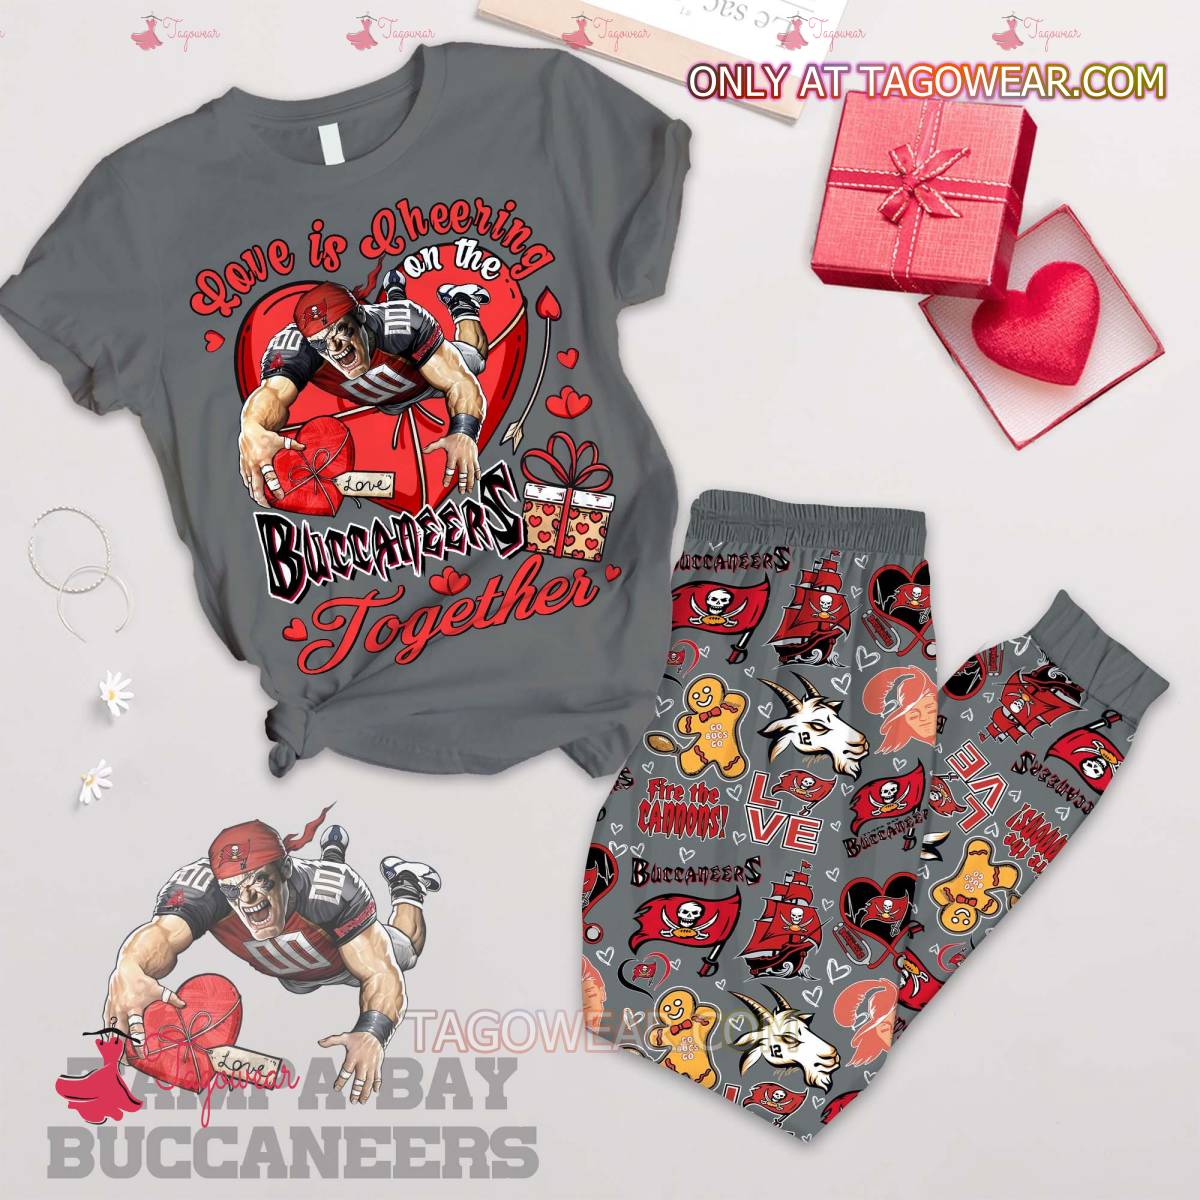 Tampa Bay Buccaneers Love Is Cheering On The Buccaneers Together Valentine Pajamas Set